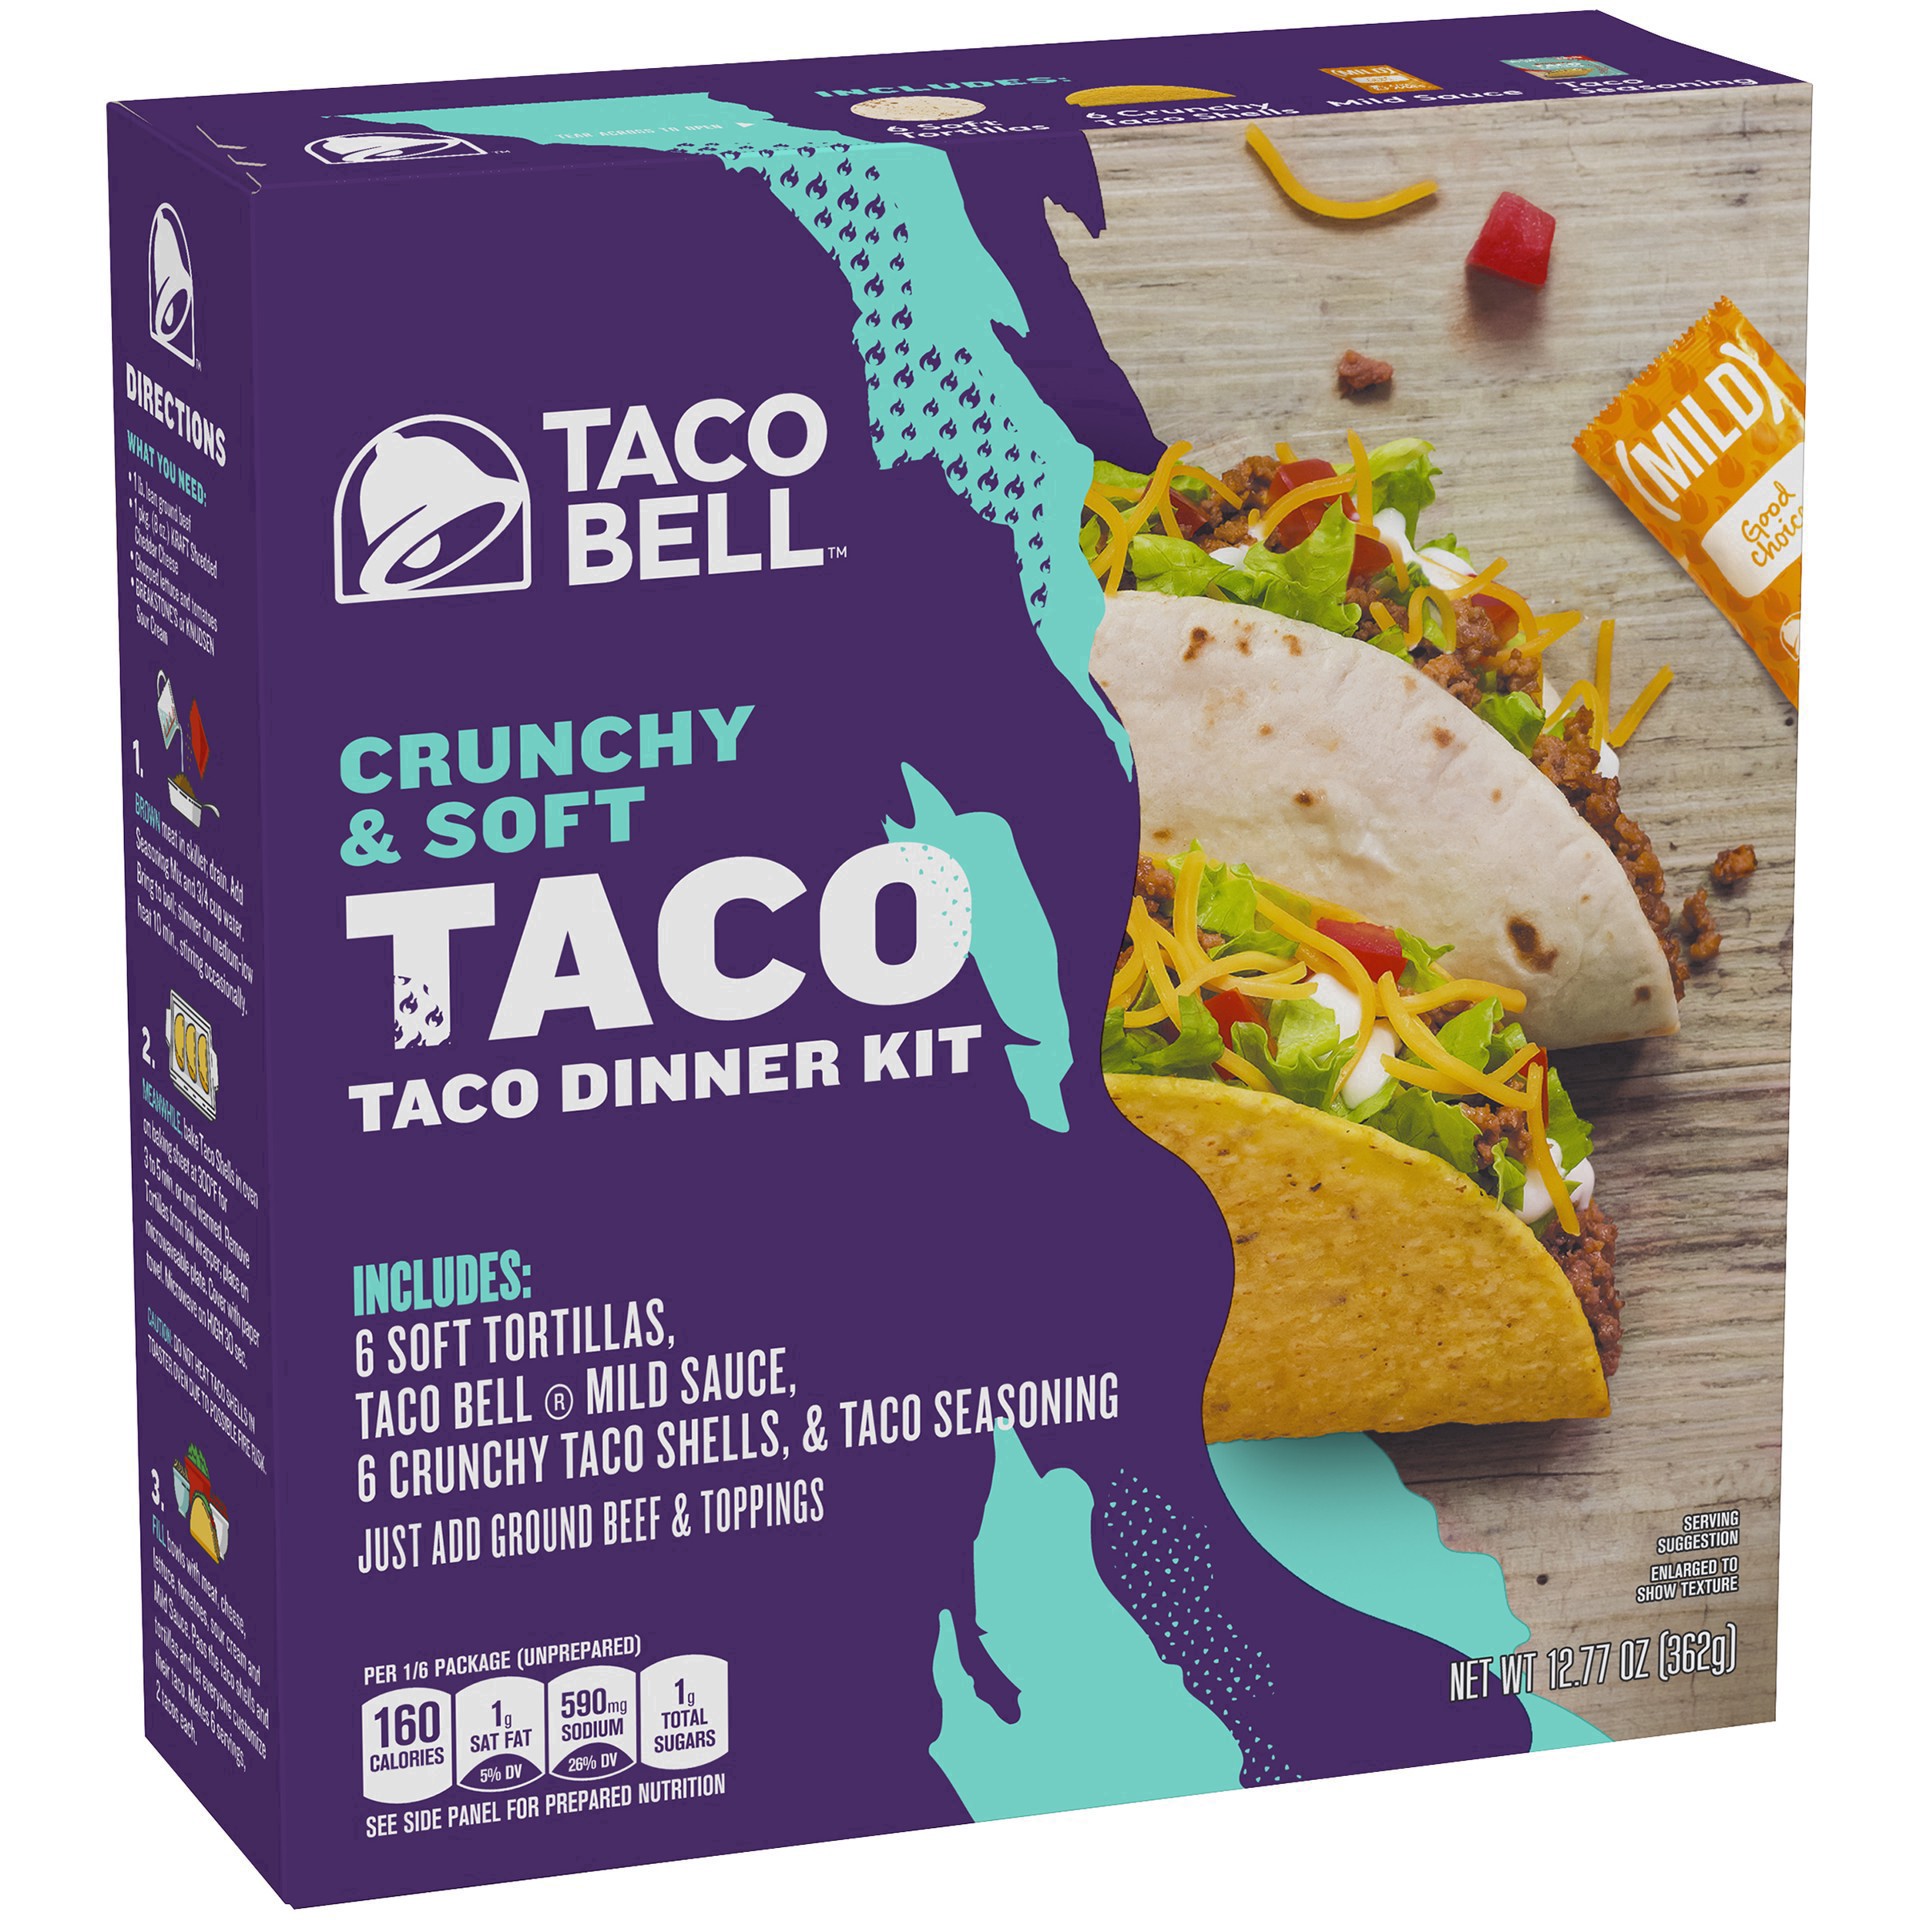 slide 78 of 101, Taco Bell Crunchy & Soft Taco Cravings Kit with 6 Soft Tortillas, 6 Crunchy Taco Shells, Taco Bell Mild Sauce & Seasoning, 12.77 oz Box, 1 ea